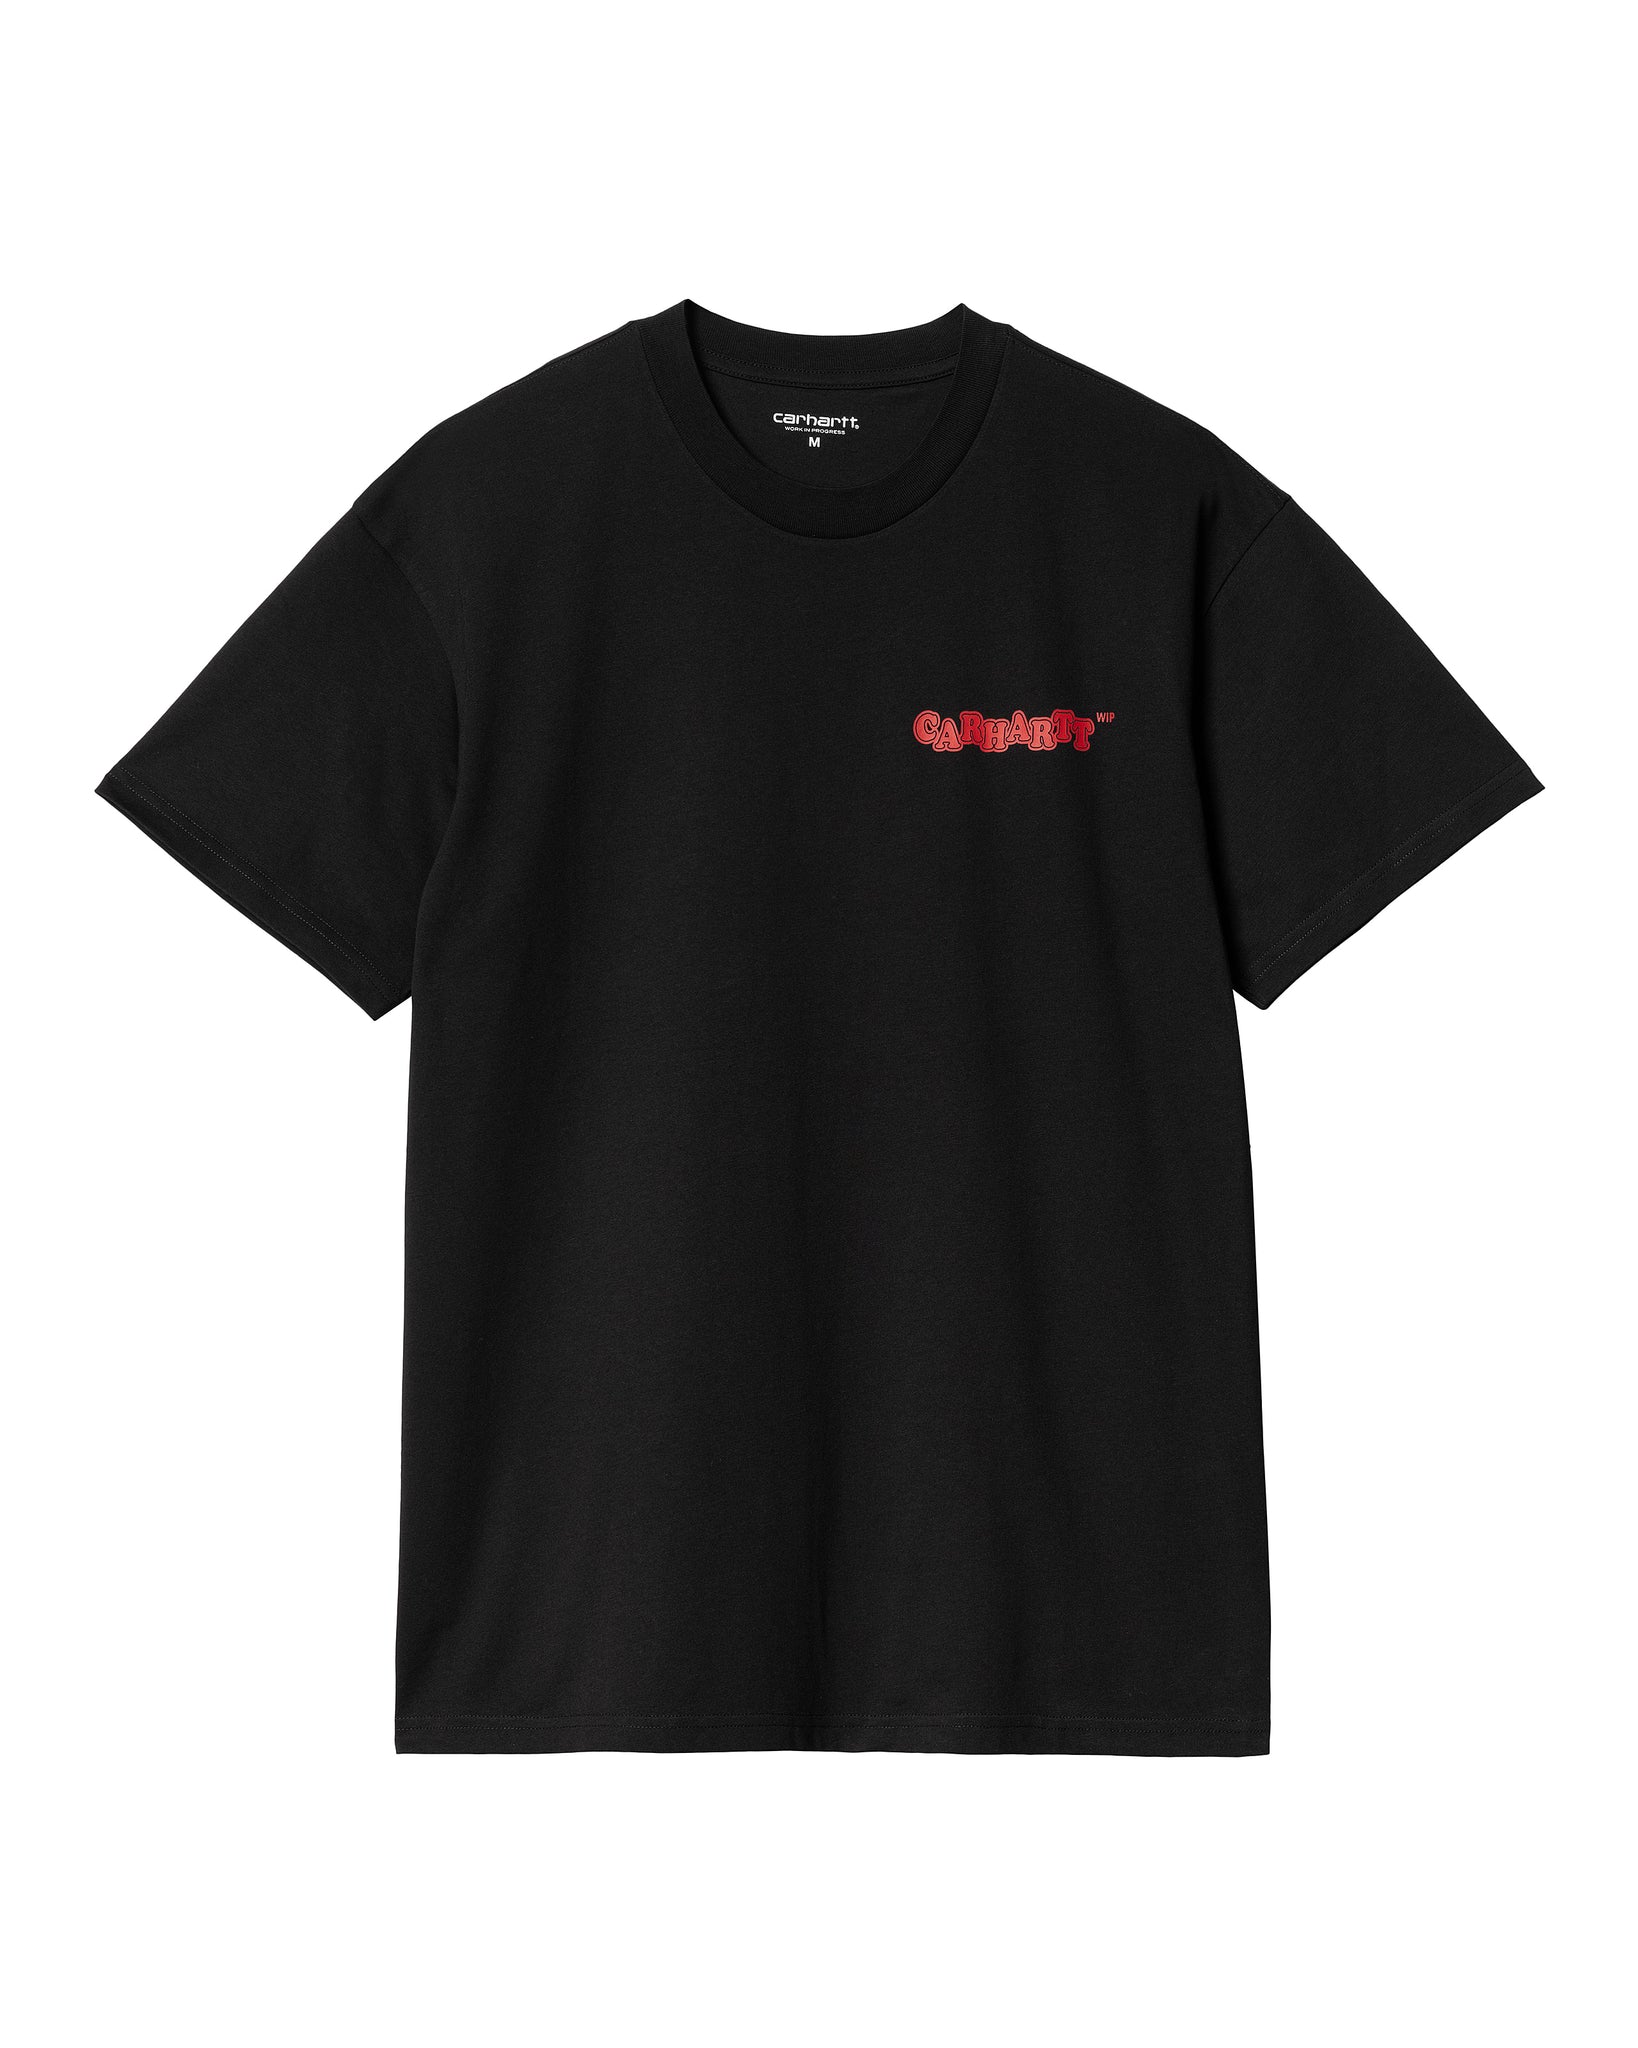 Camiseta S/S Fast Food - Black/Red